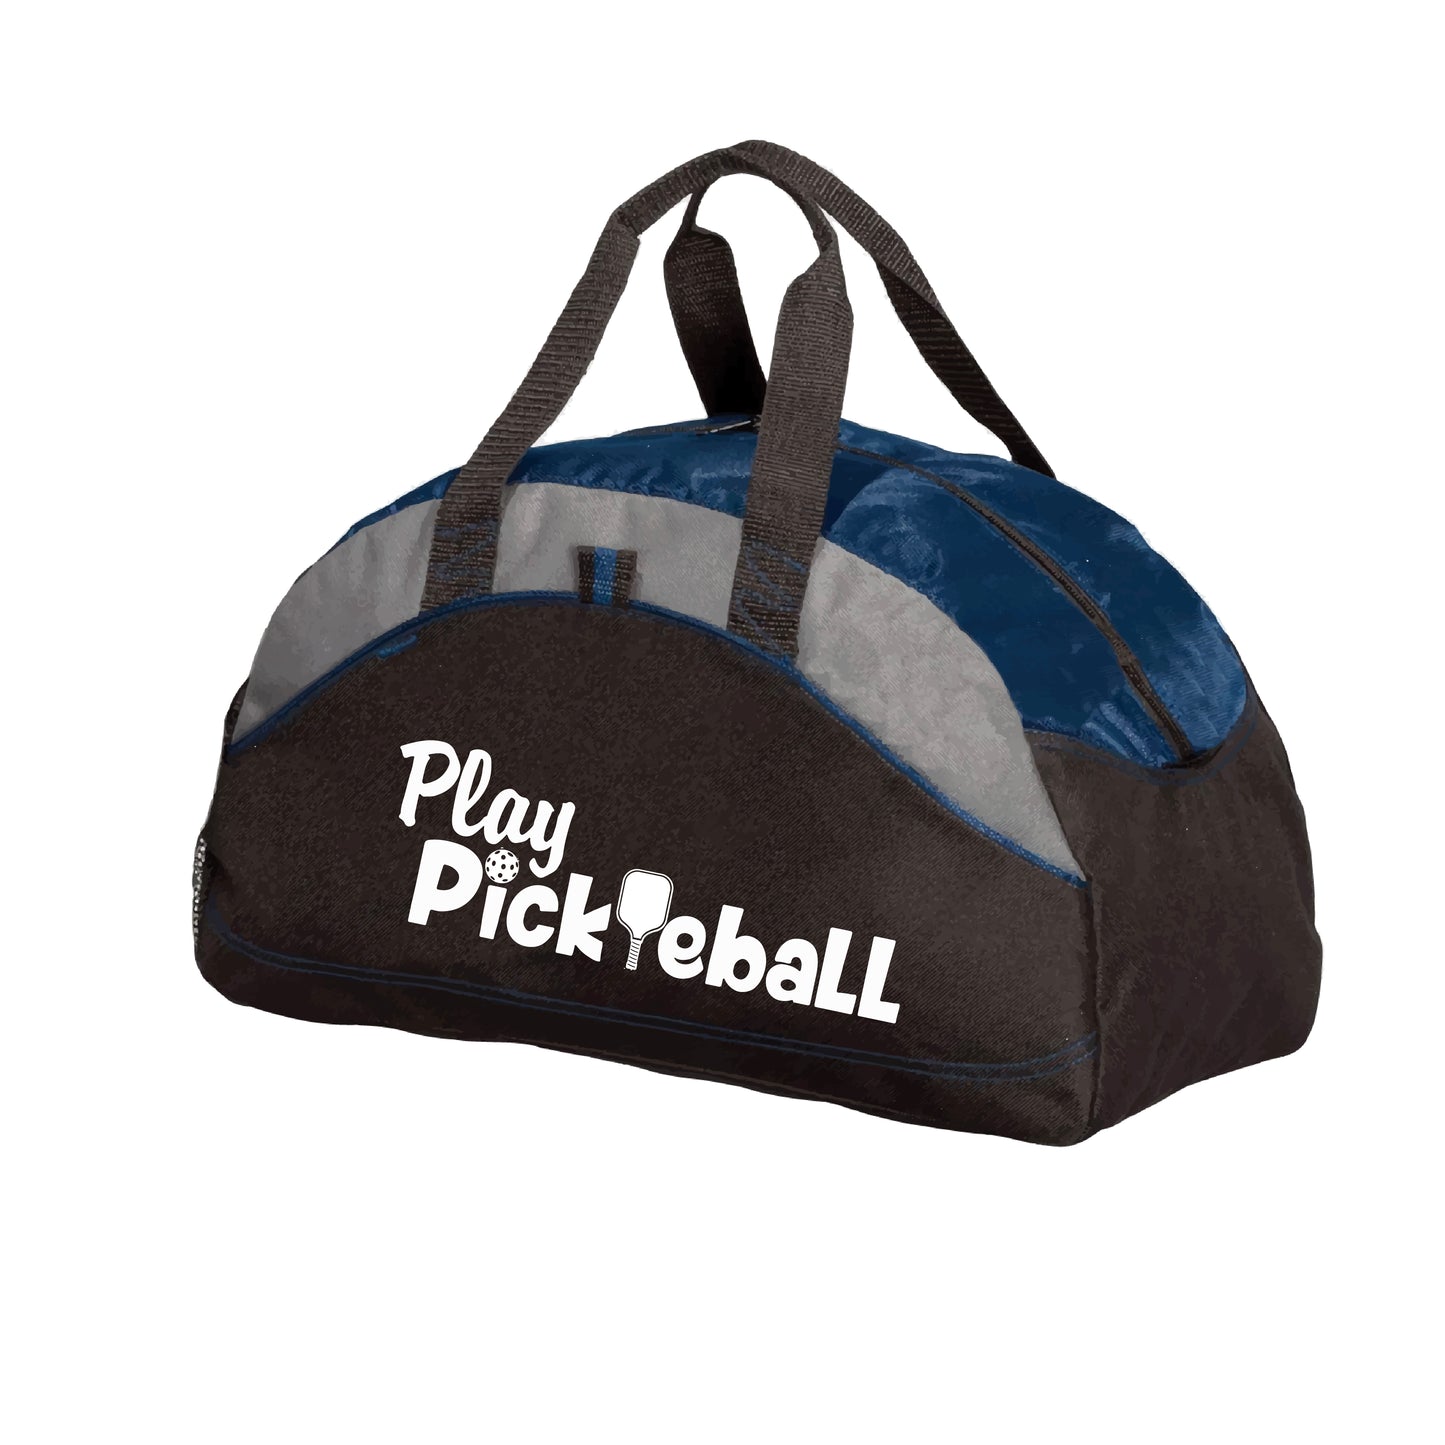 Play Pickleball | Pickleball Sports Duffel | Medium Size Court Bag